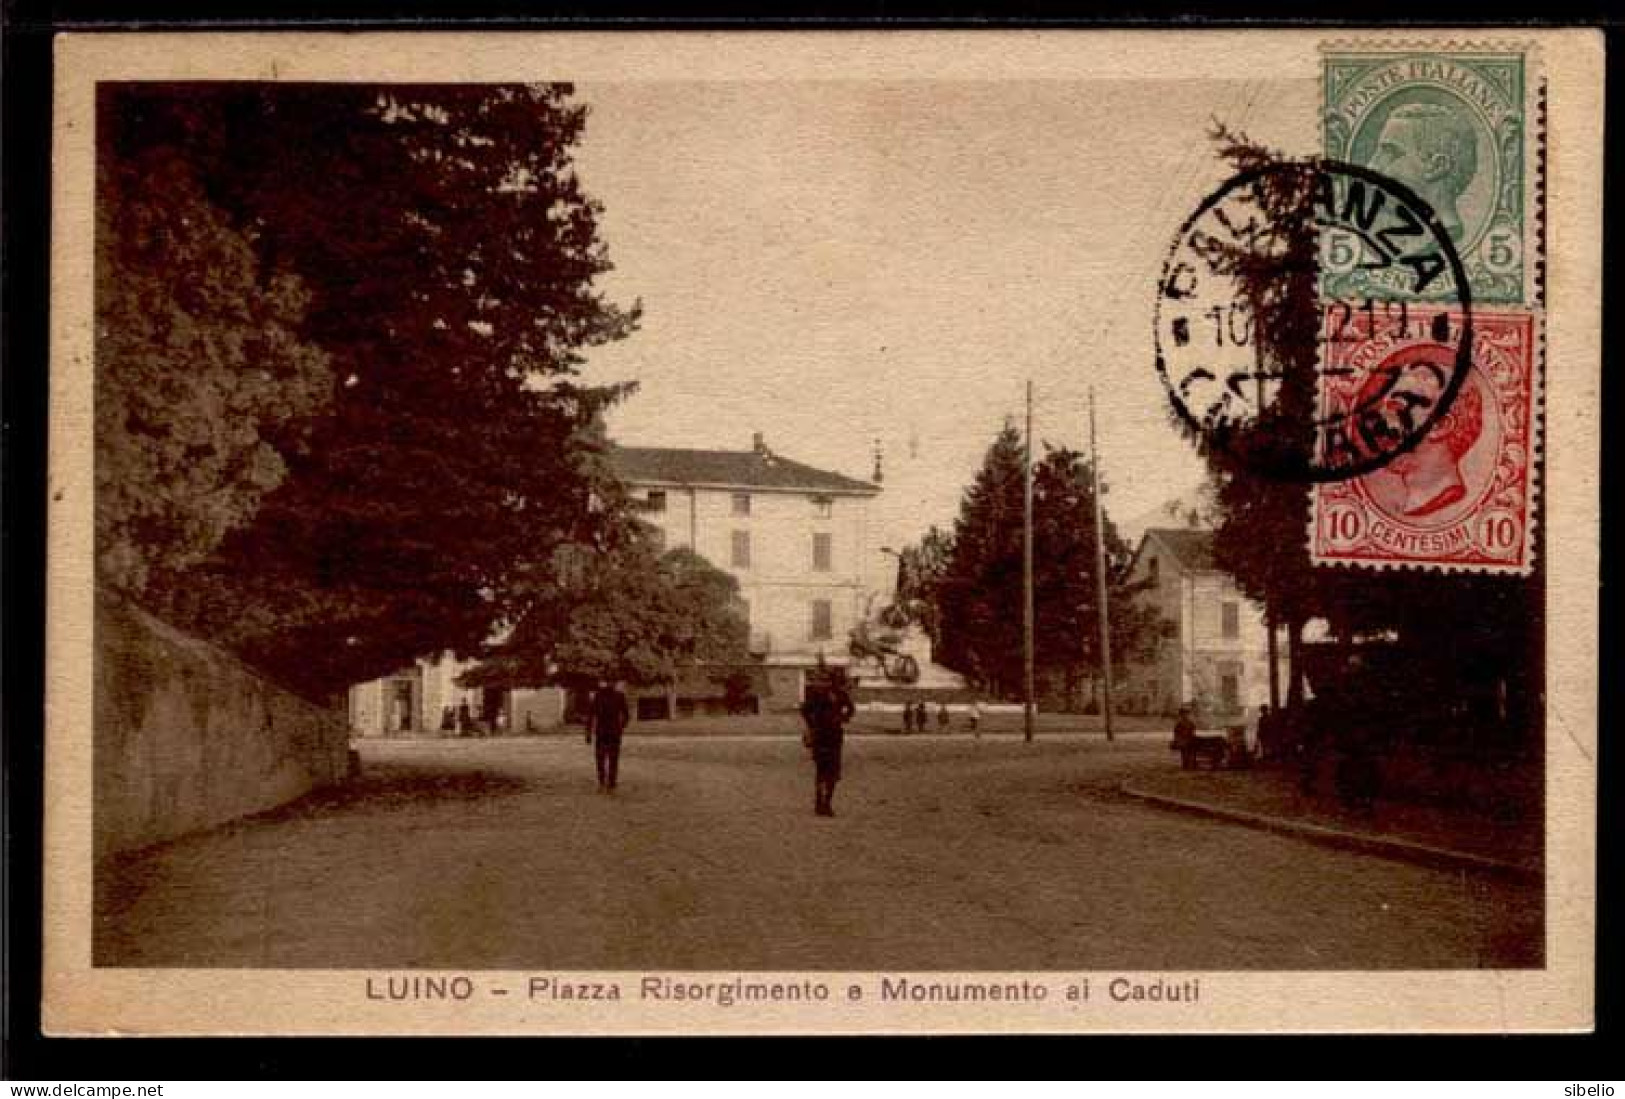 LUINO - Piazza Risorgimento E Monumento Ai Caduti - Viaggiata 1922 - Rif. 01568N - Luino